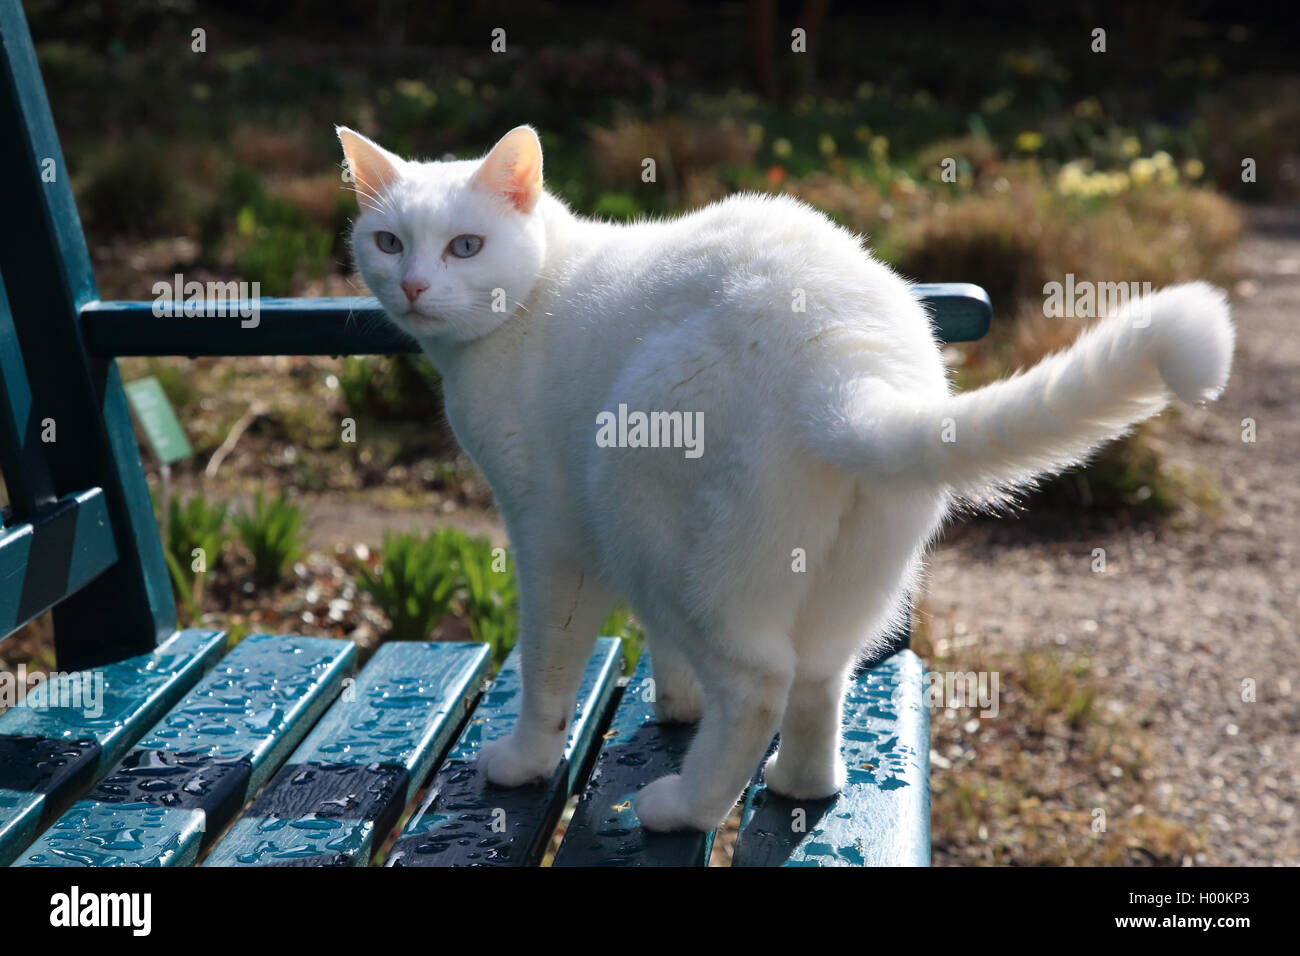 Hauskatze, Hauskatze (Felis silvestris f. catus), weiße Katze auf einem nassen Garten Stuhl, Deutschland Stockfoto